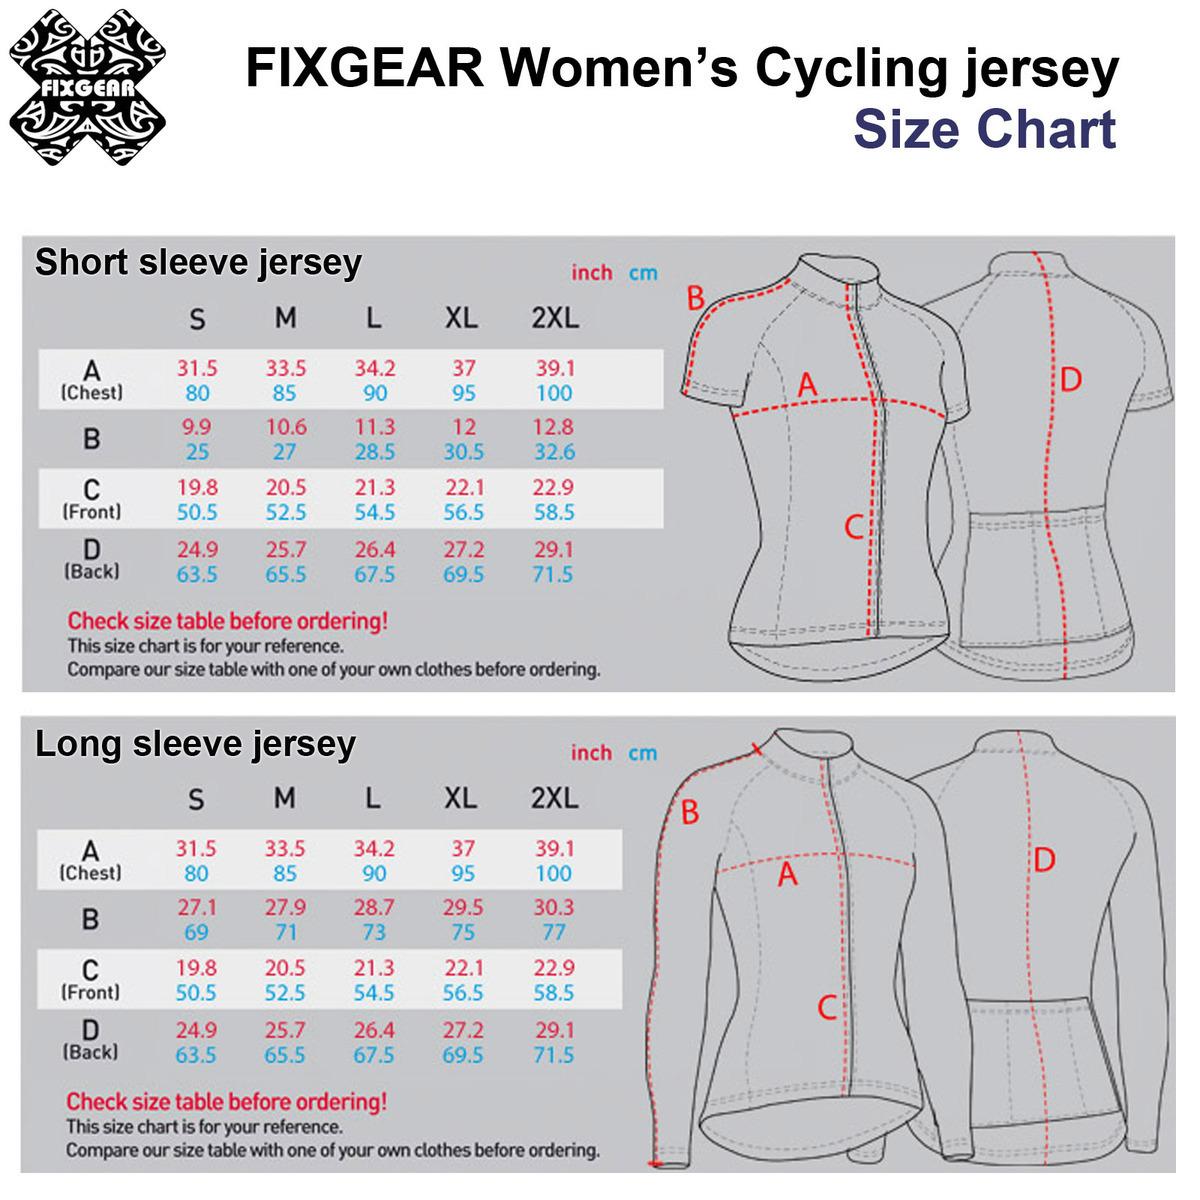 fixgear womens cycling jerseys sizing chart